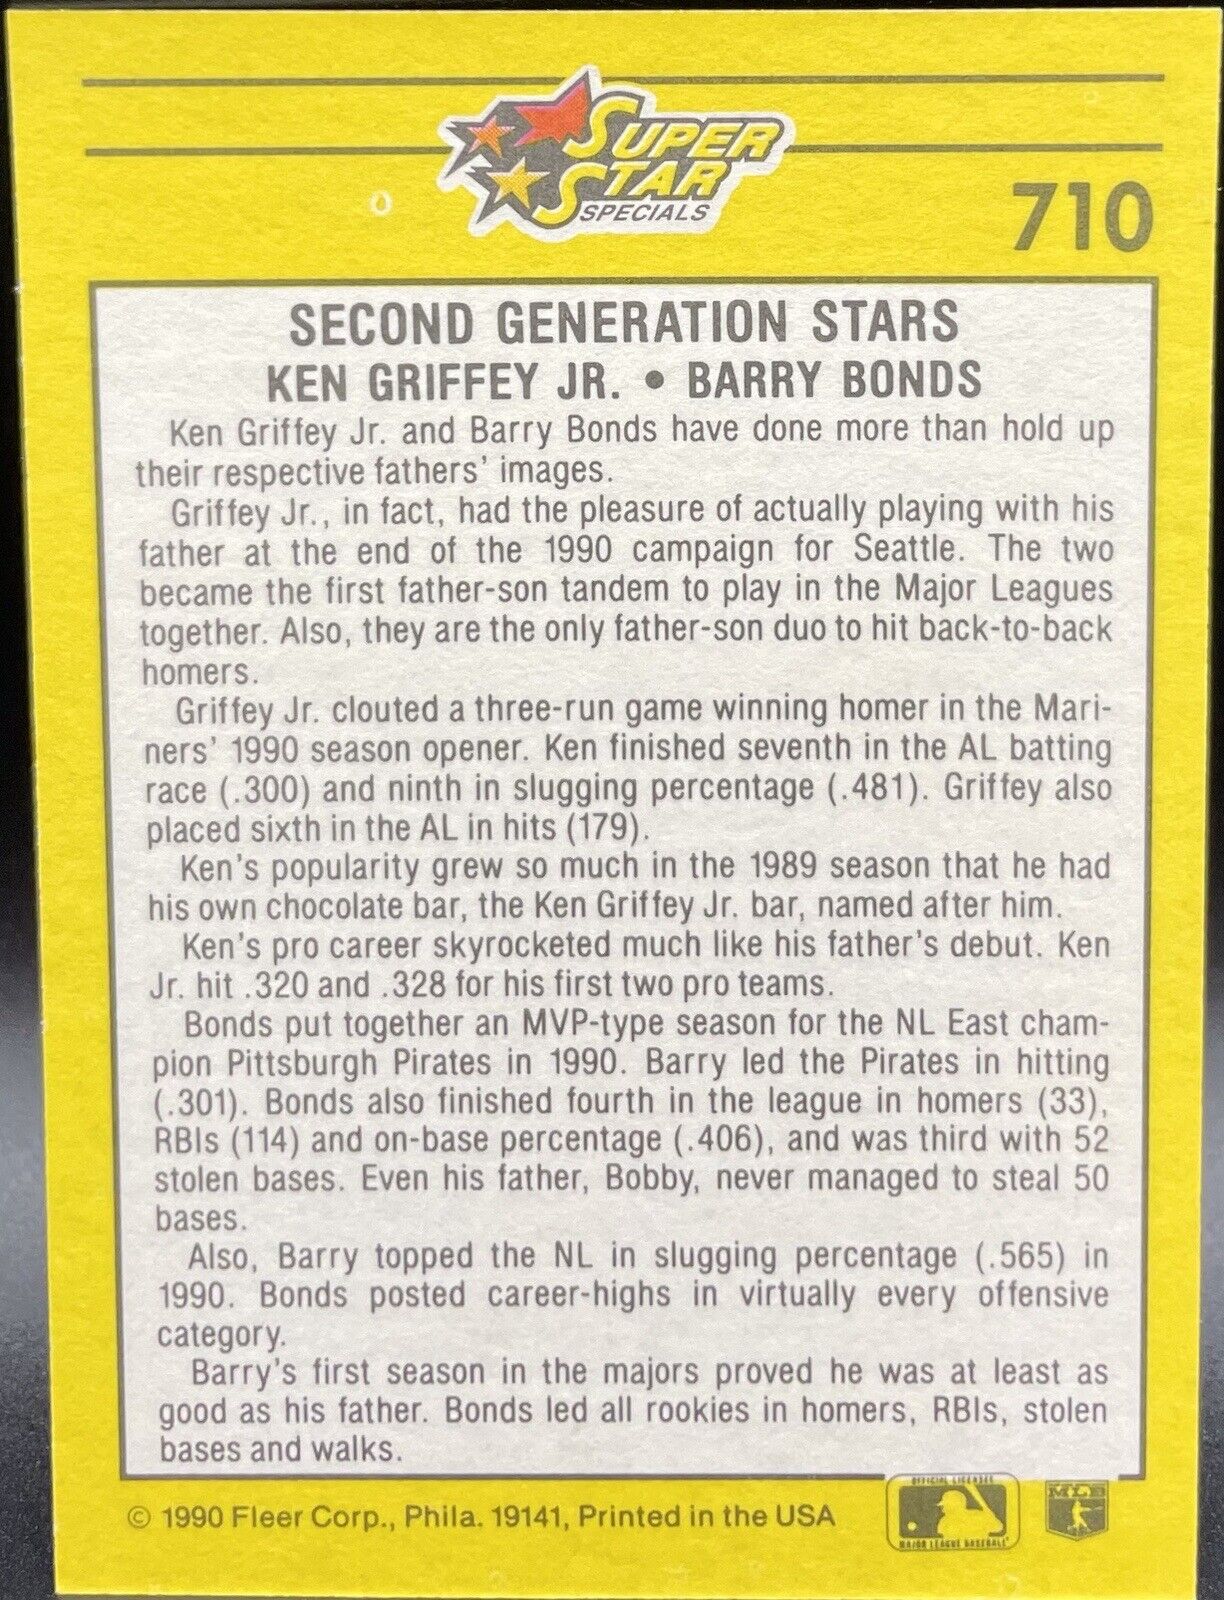 1990 Fleer #710 Ken Griffey, Jr. & Barry Bonds Second Generation Stars